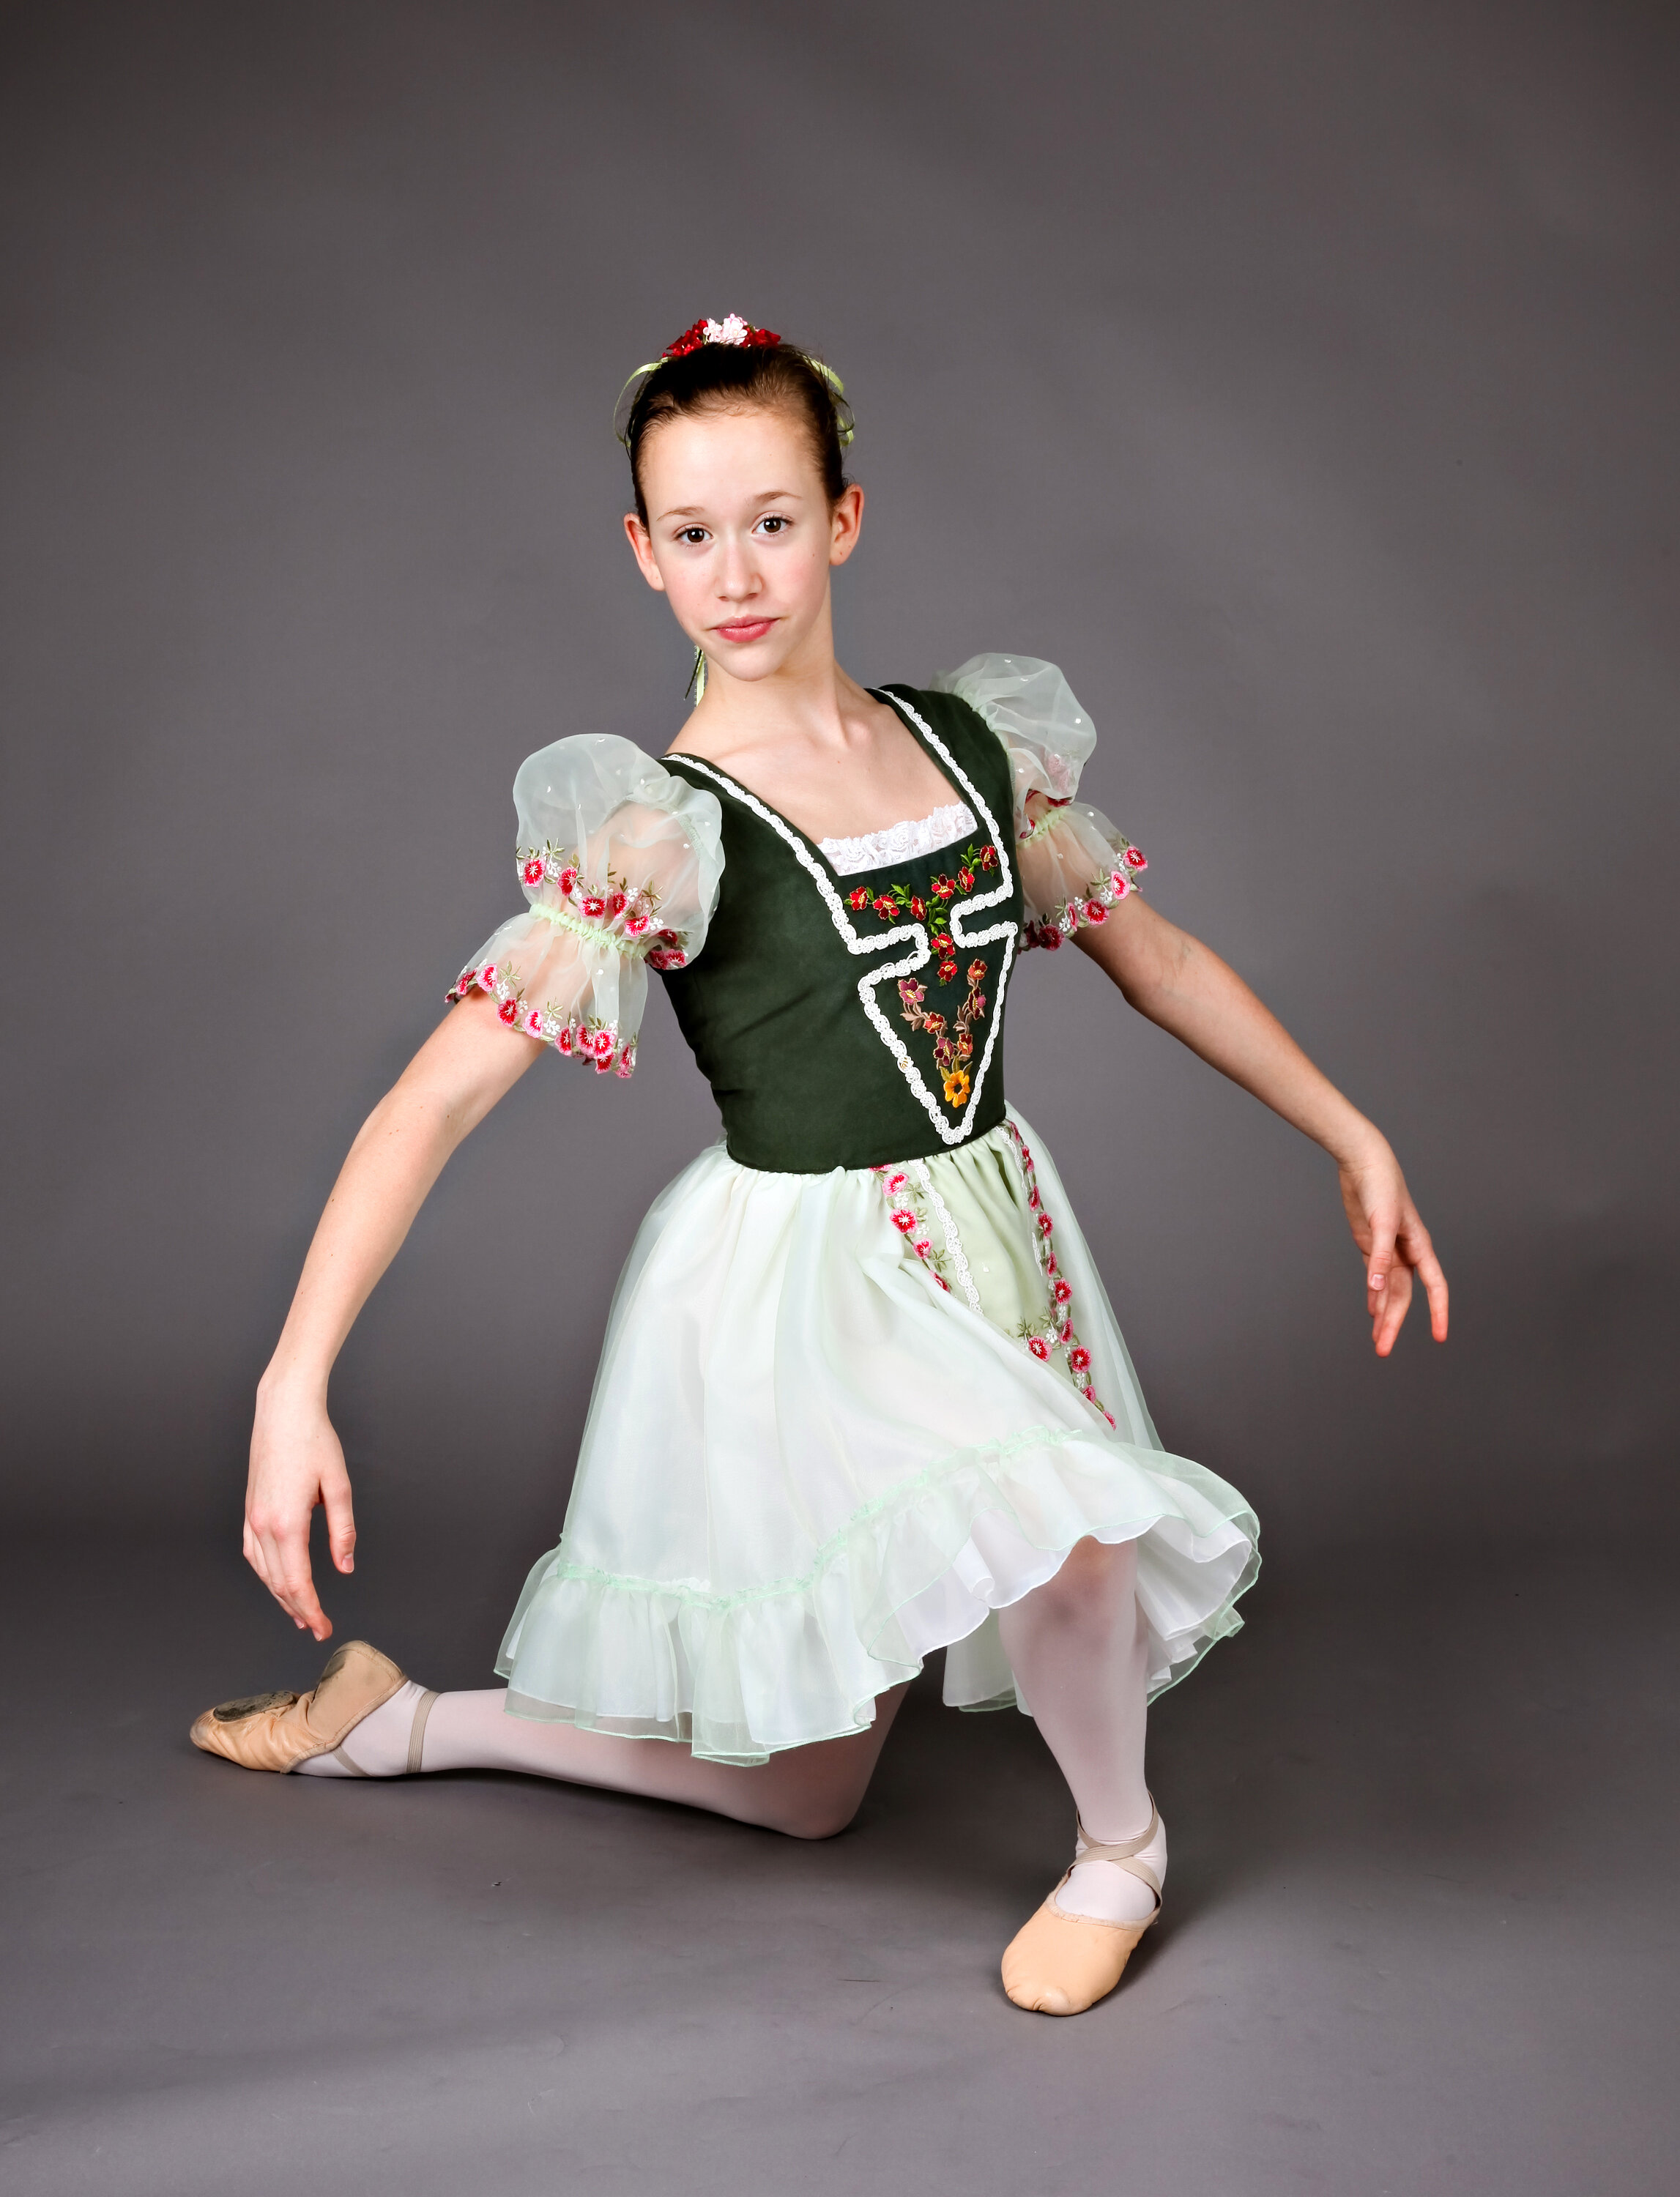 Copellia dancer Indianapolis school of ballet.jpg